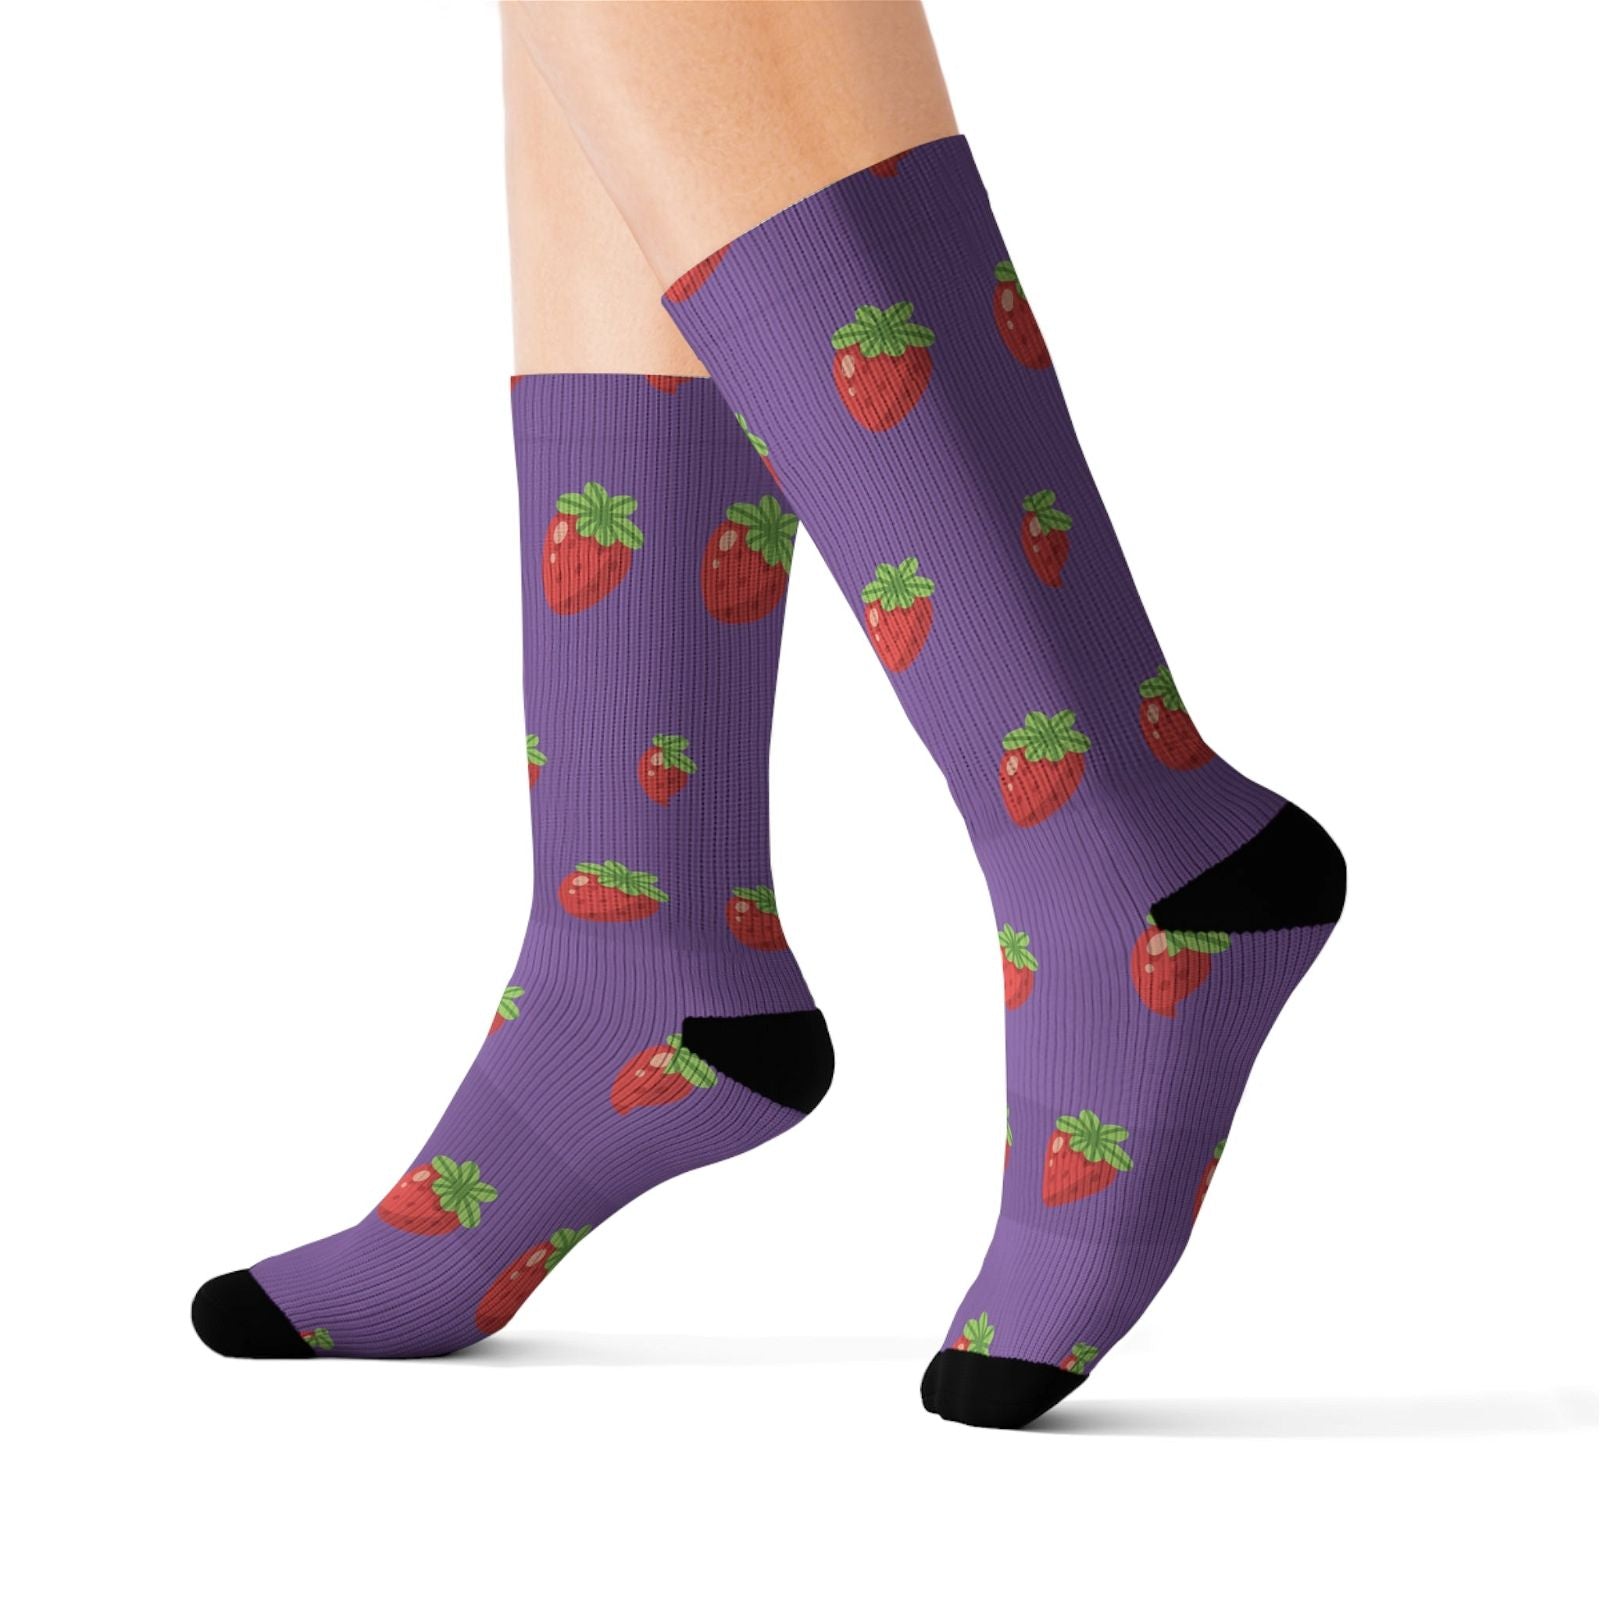 Socks - Fruit designs - Alex's Store - S - 